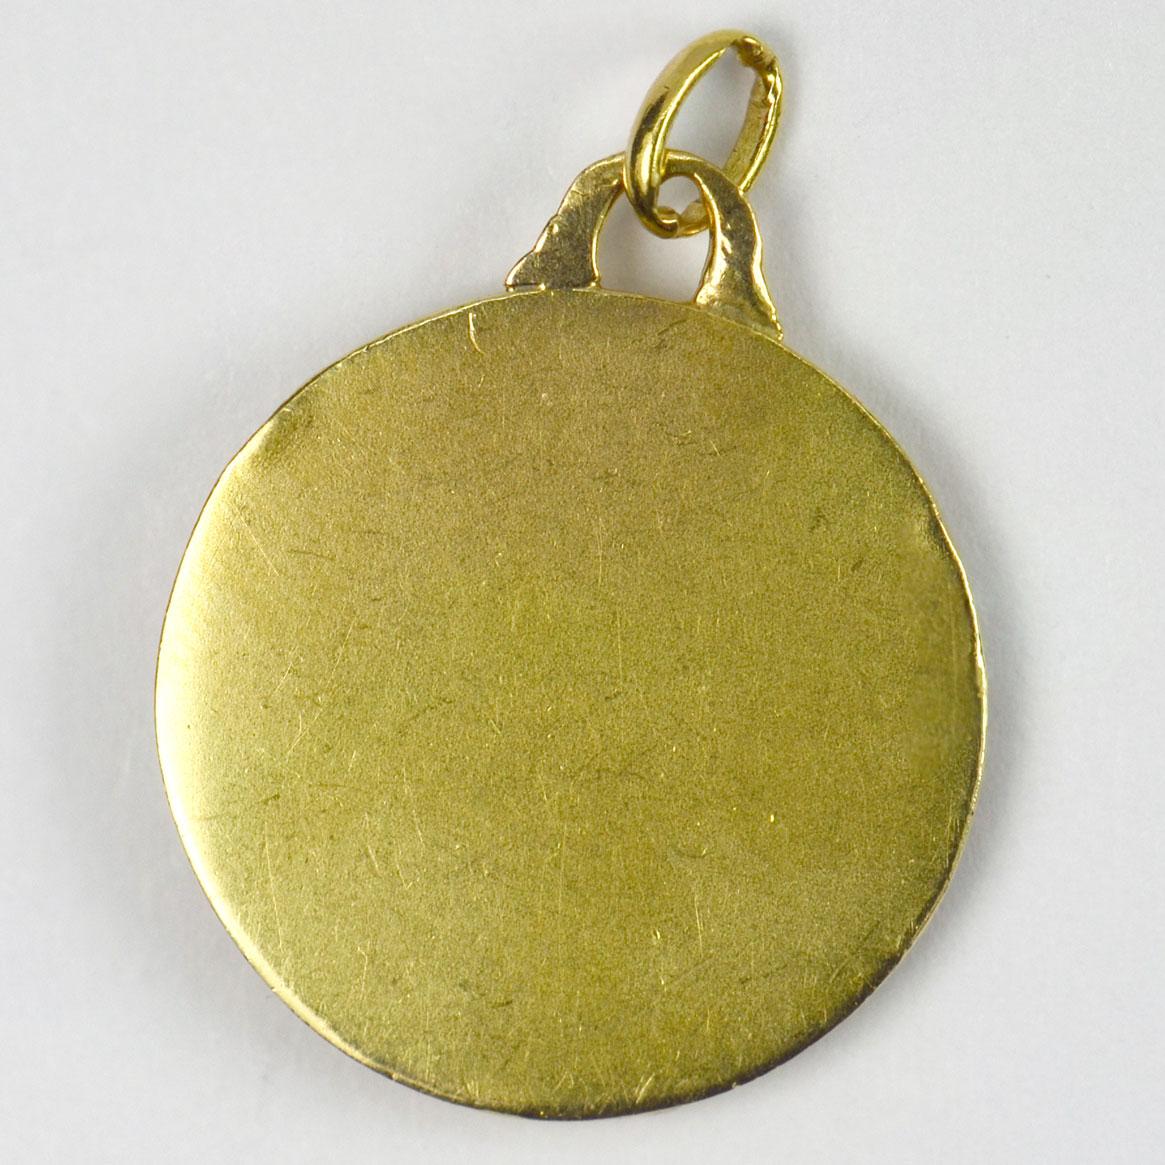 French Cherub Head Medal 18k Yellow Gold Charm Pendant 1